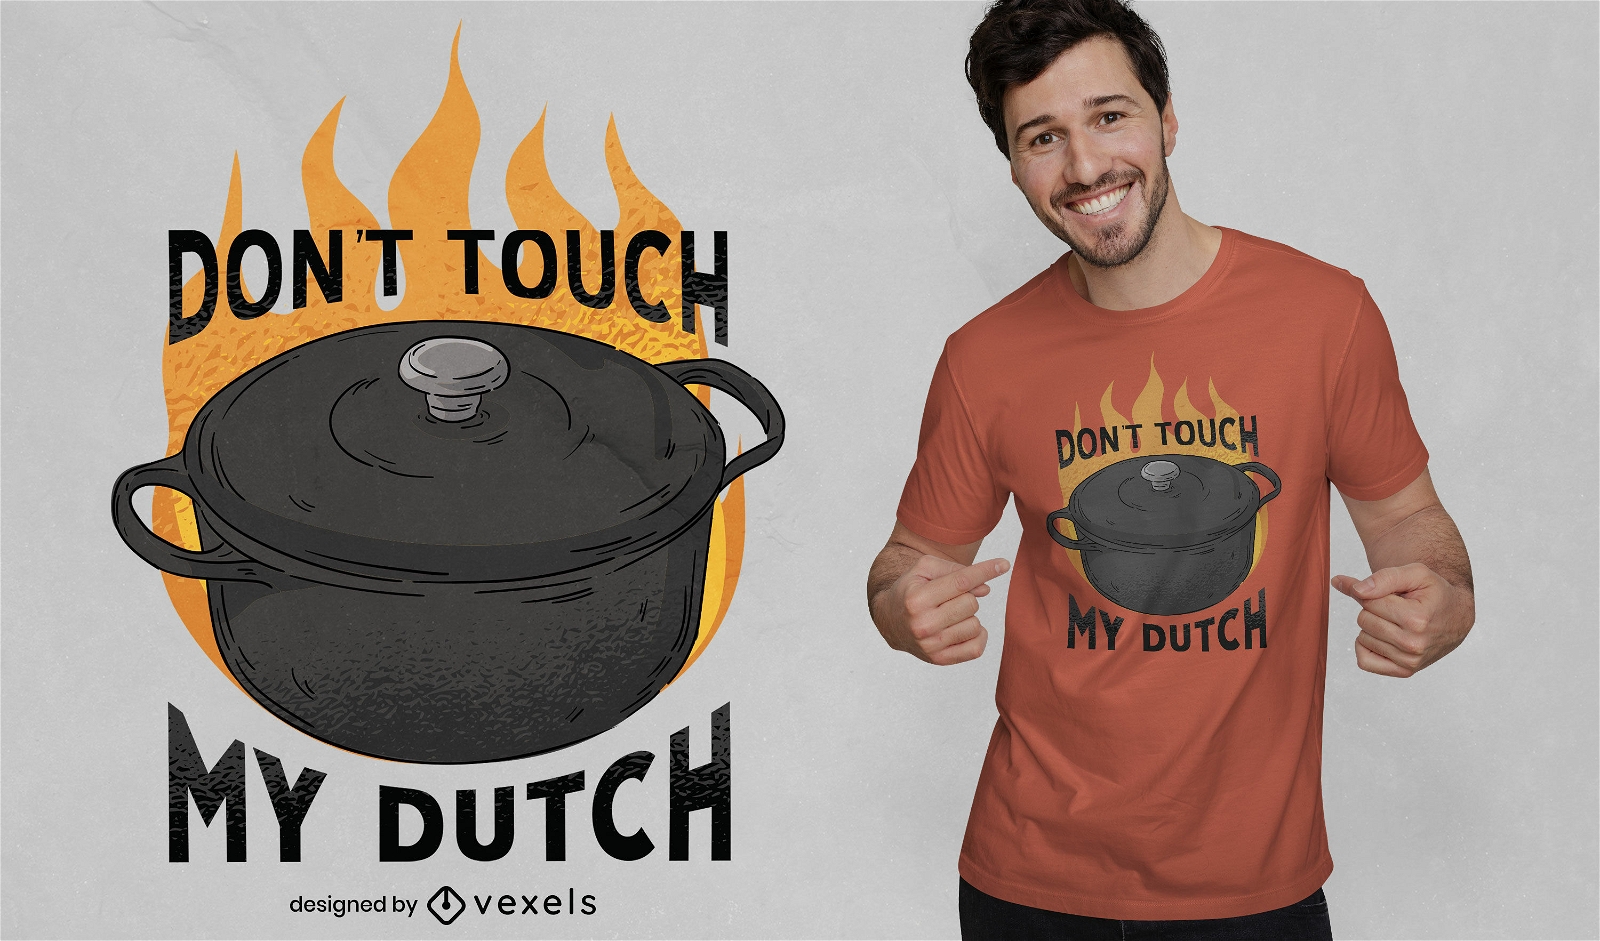 No toques el dise?o de mi camiseta de comida holandesa